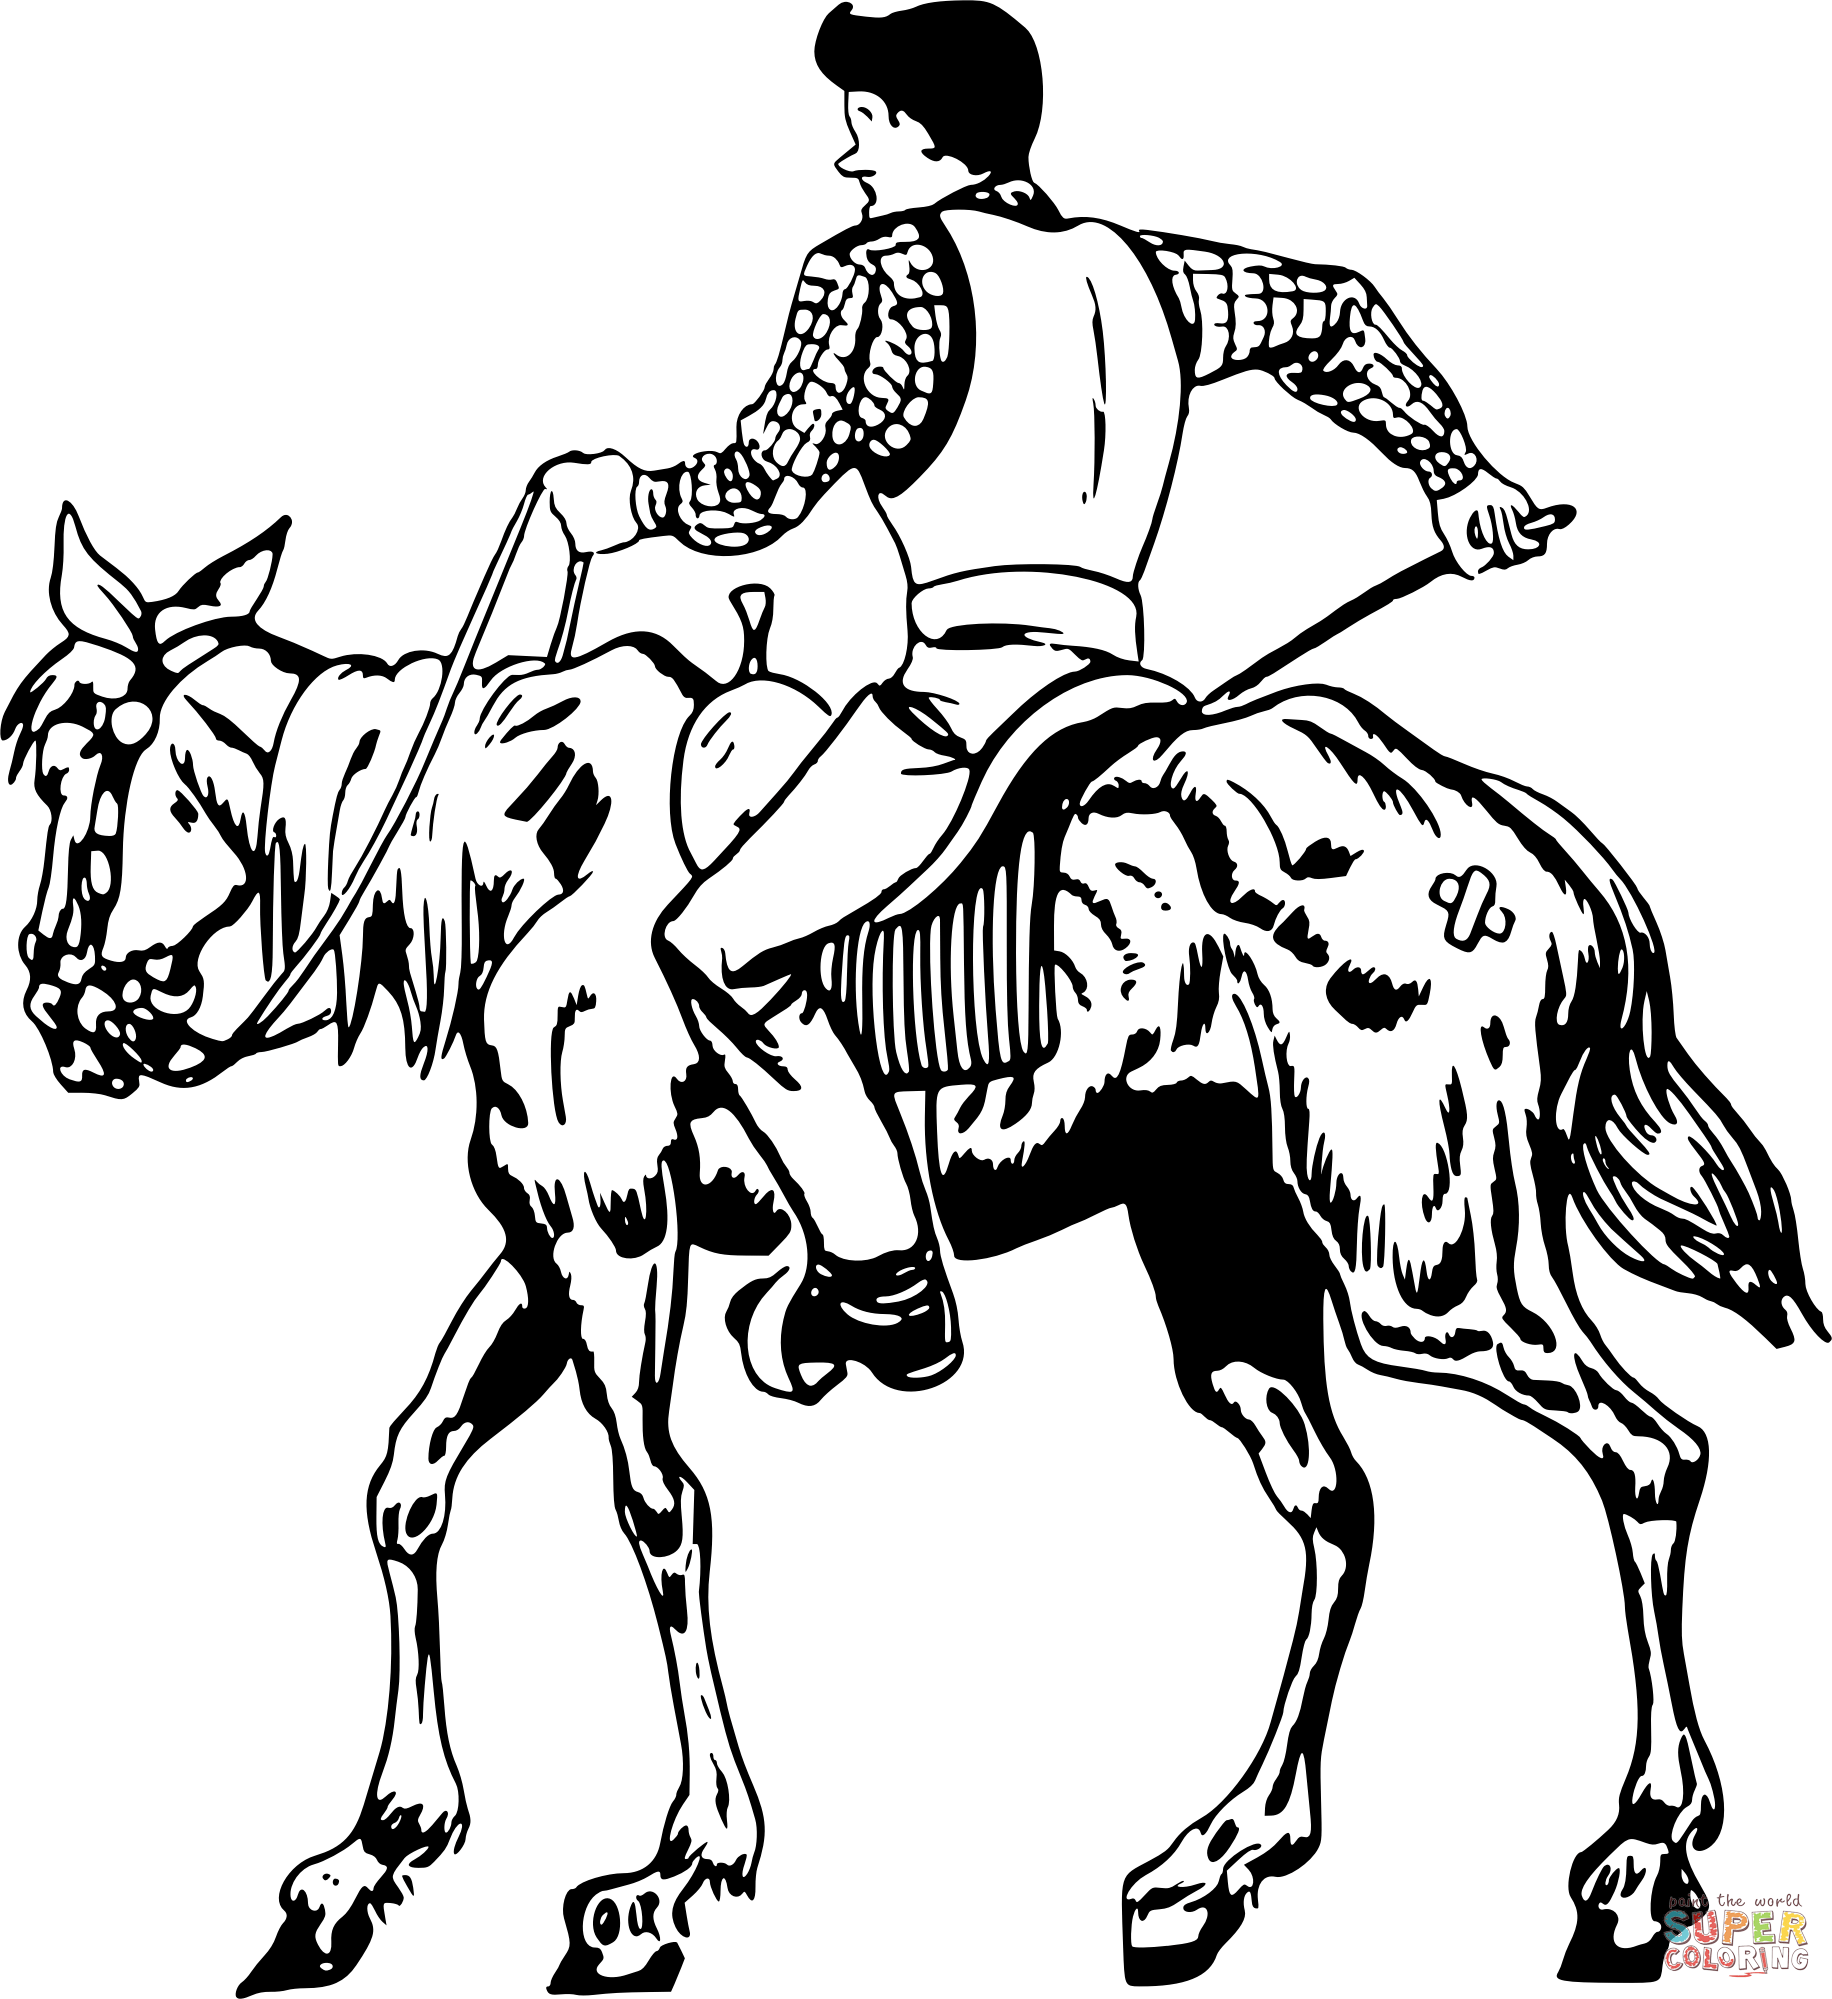 Vintage man on horse